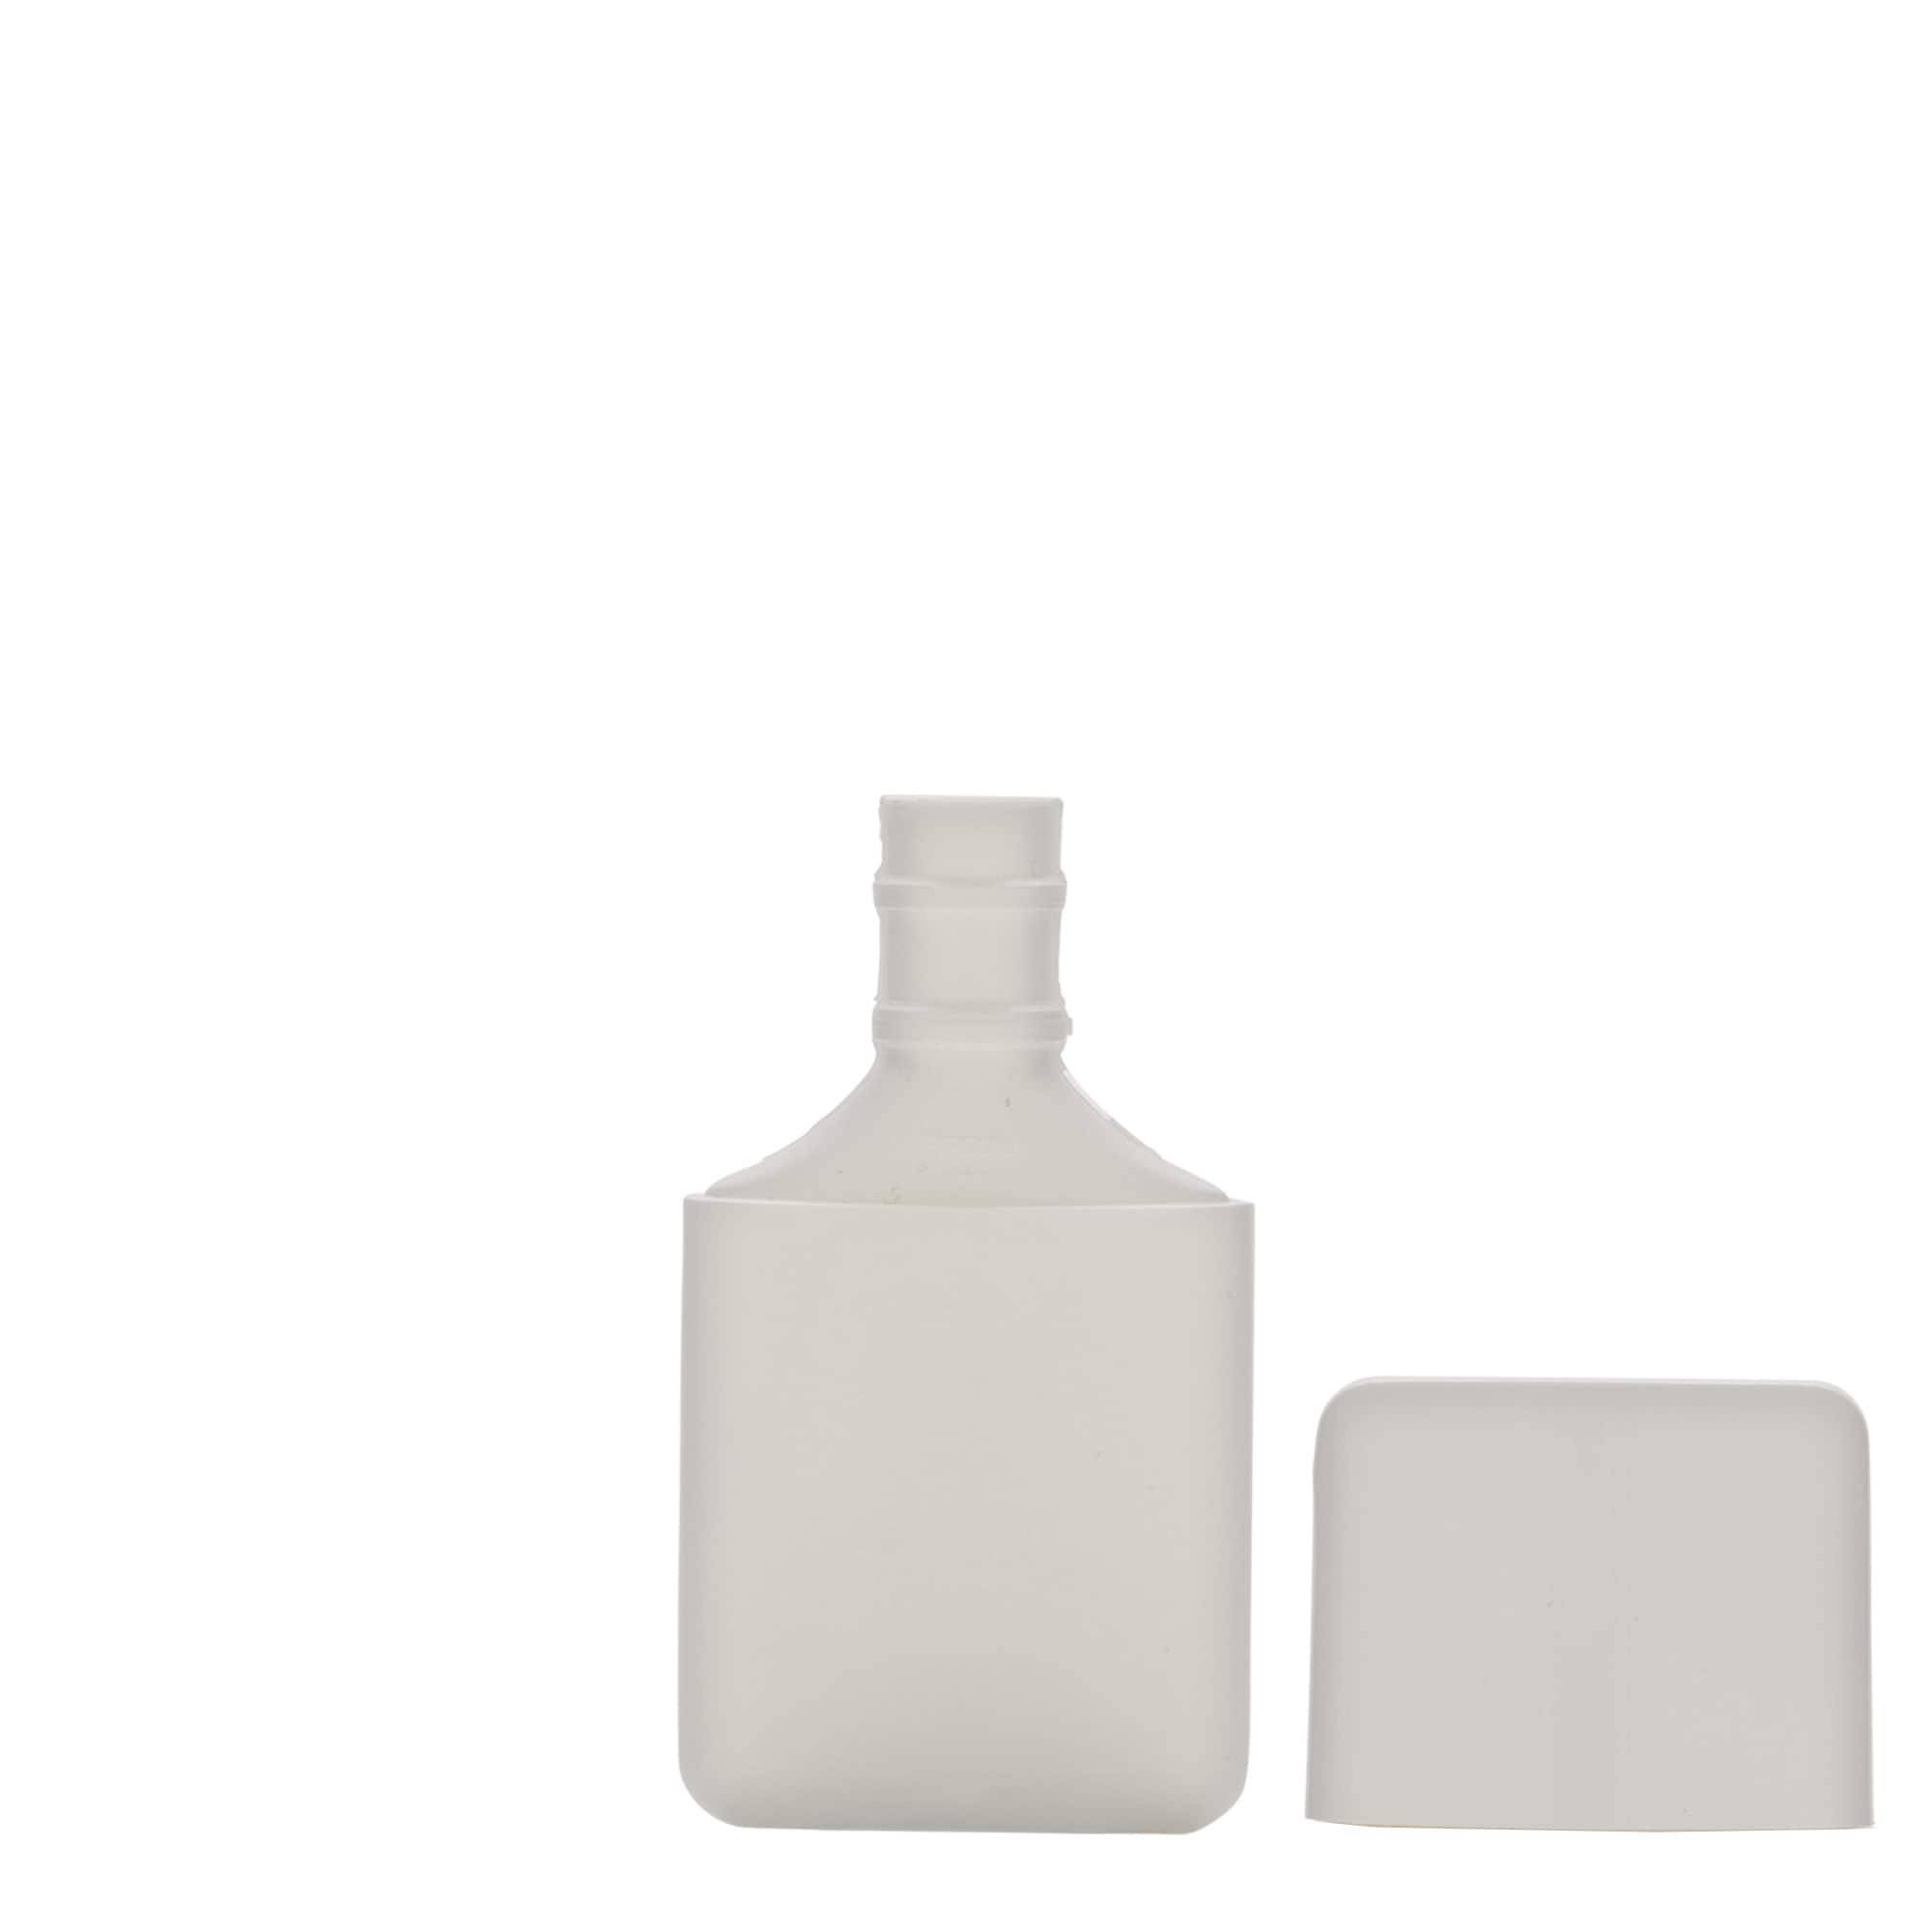 30 ml tube bottle, oval, HDPE plastic, white, closure: screw cap